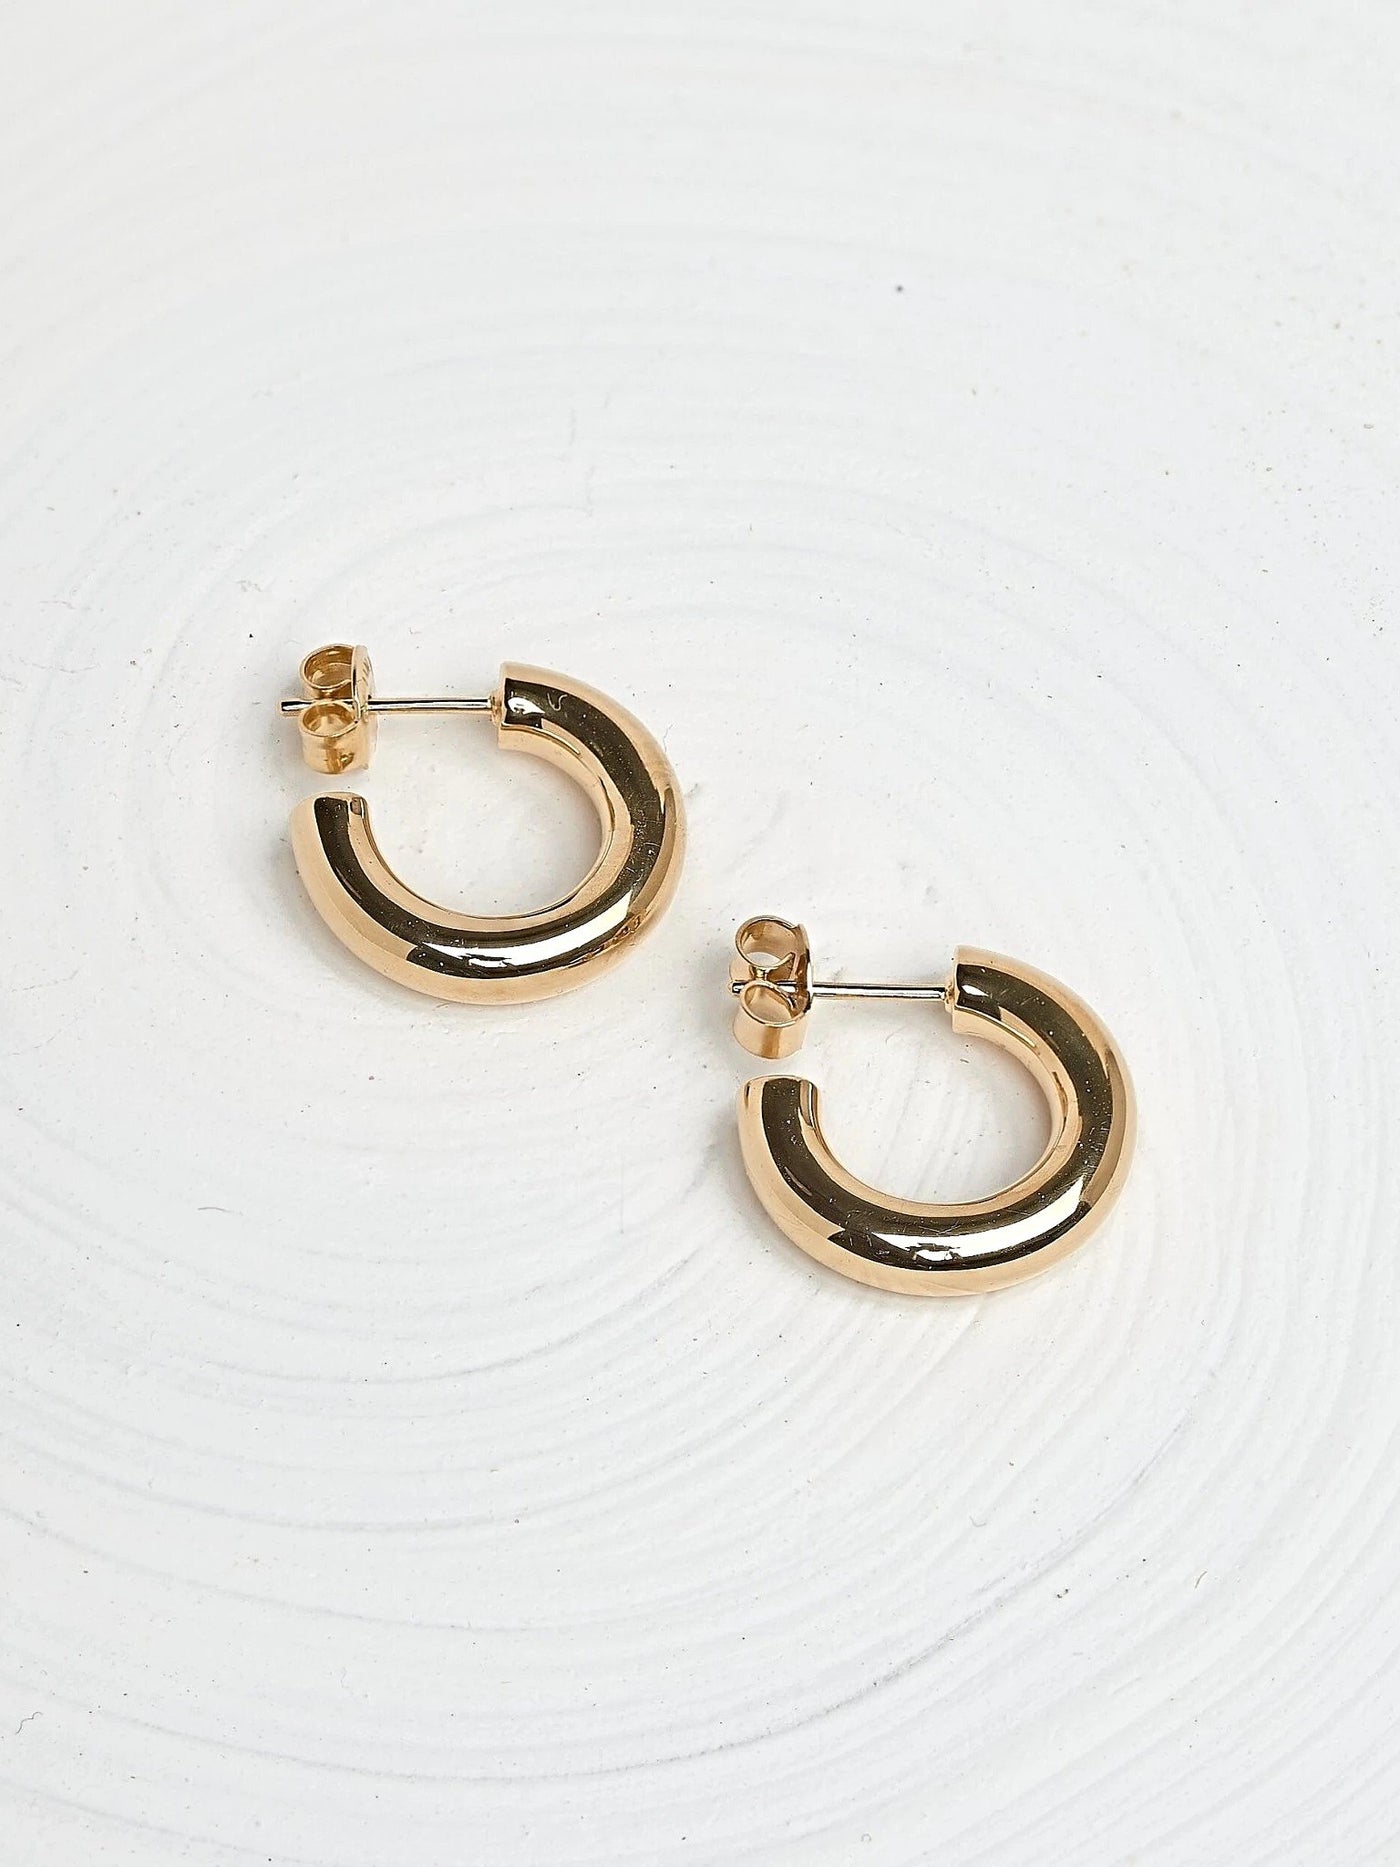 Vero Hoop Earrings - 24K Gold PlatedBackUpItemsBest Friend GiftLunai Jewelry